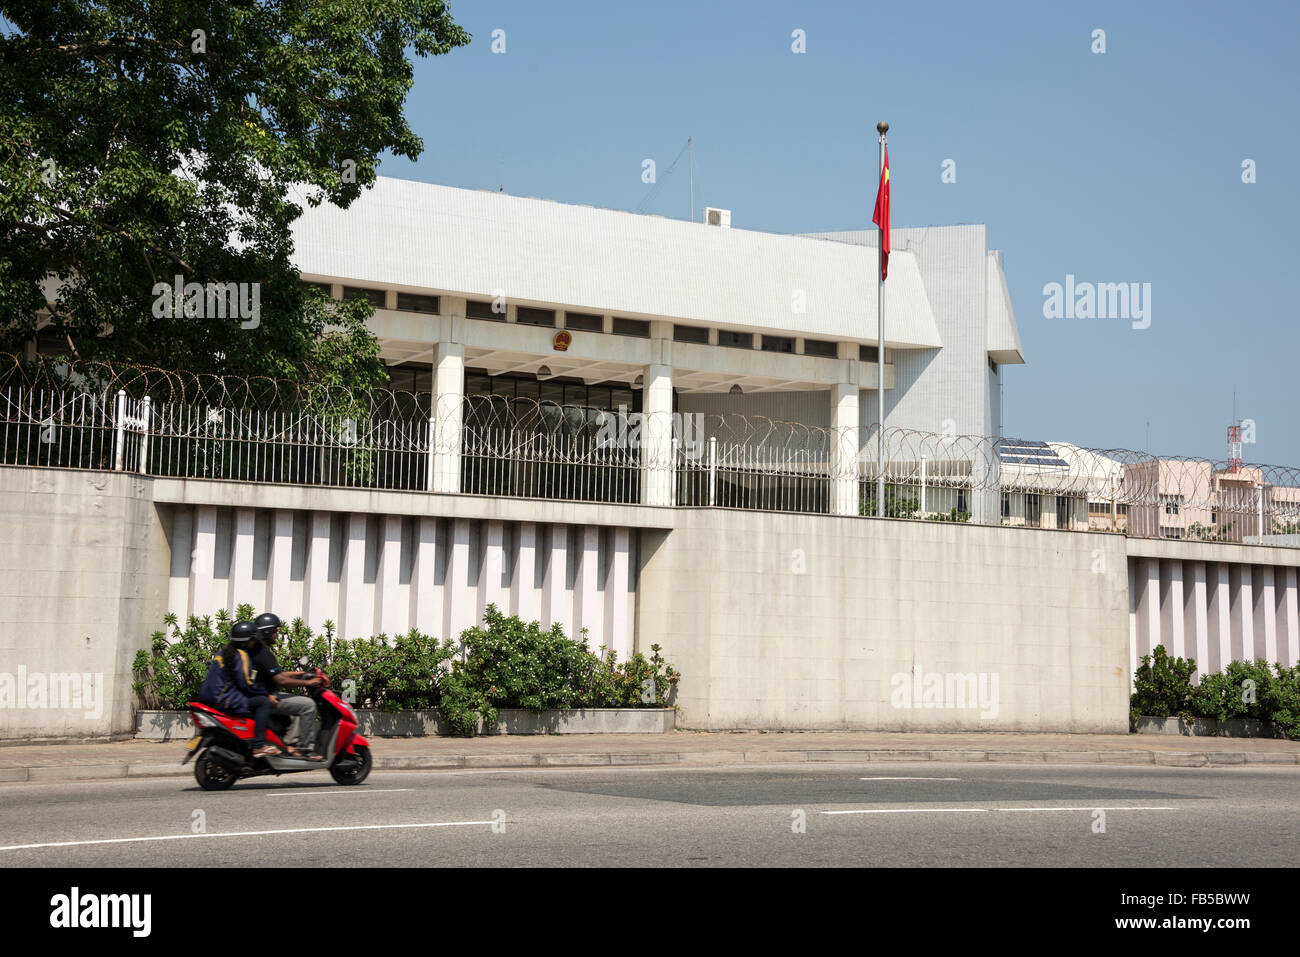 Botschaft der Volksrepublik China in Bauddhaloka Mawatha, Colombo, Sri Lanka Stockfoto